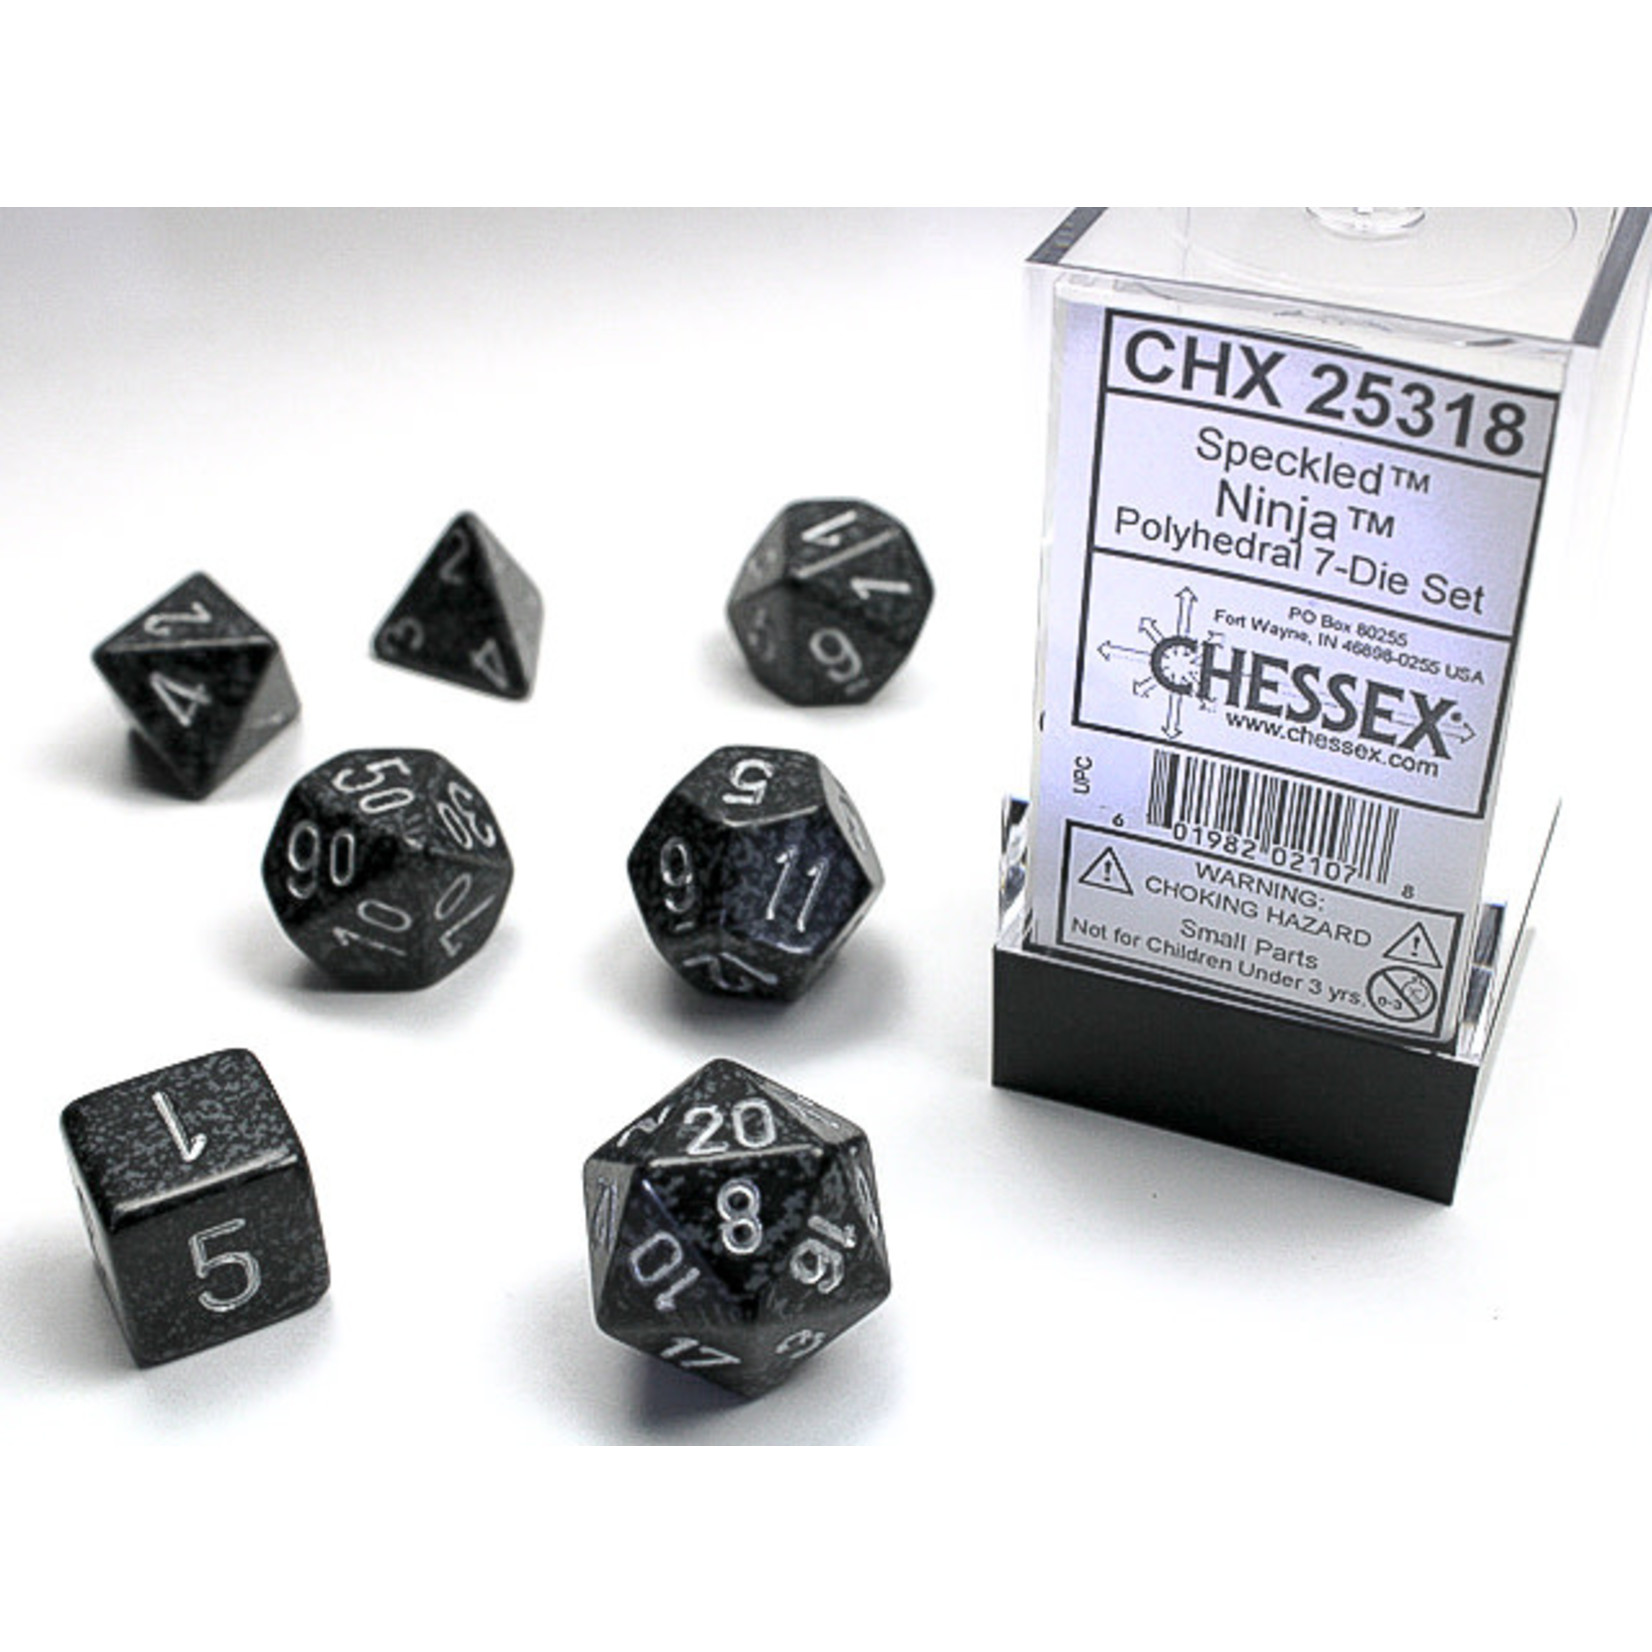 Chessex 25318 Speckled 7pc Ninja RPG Dice